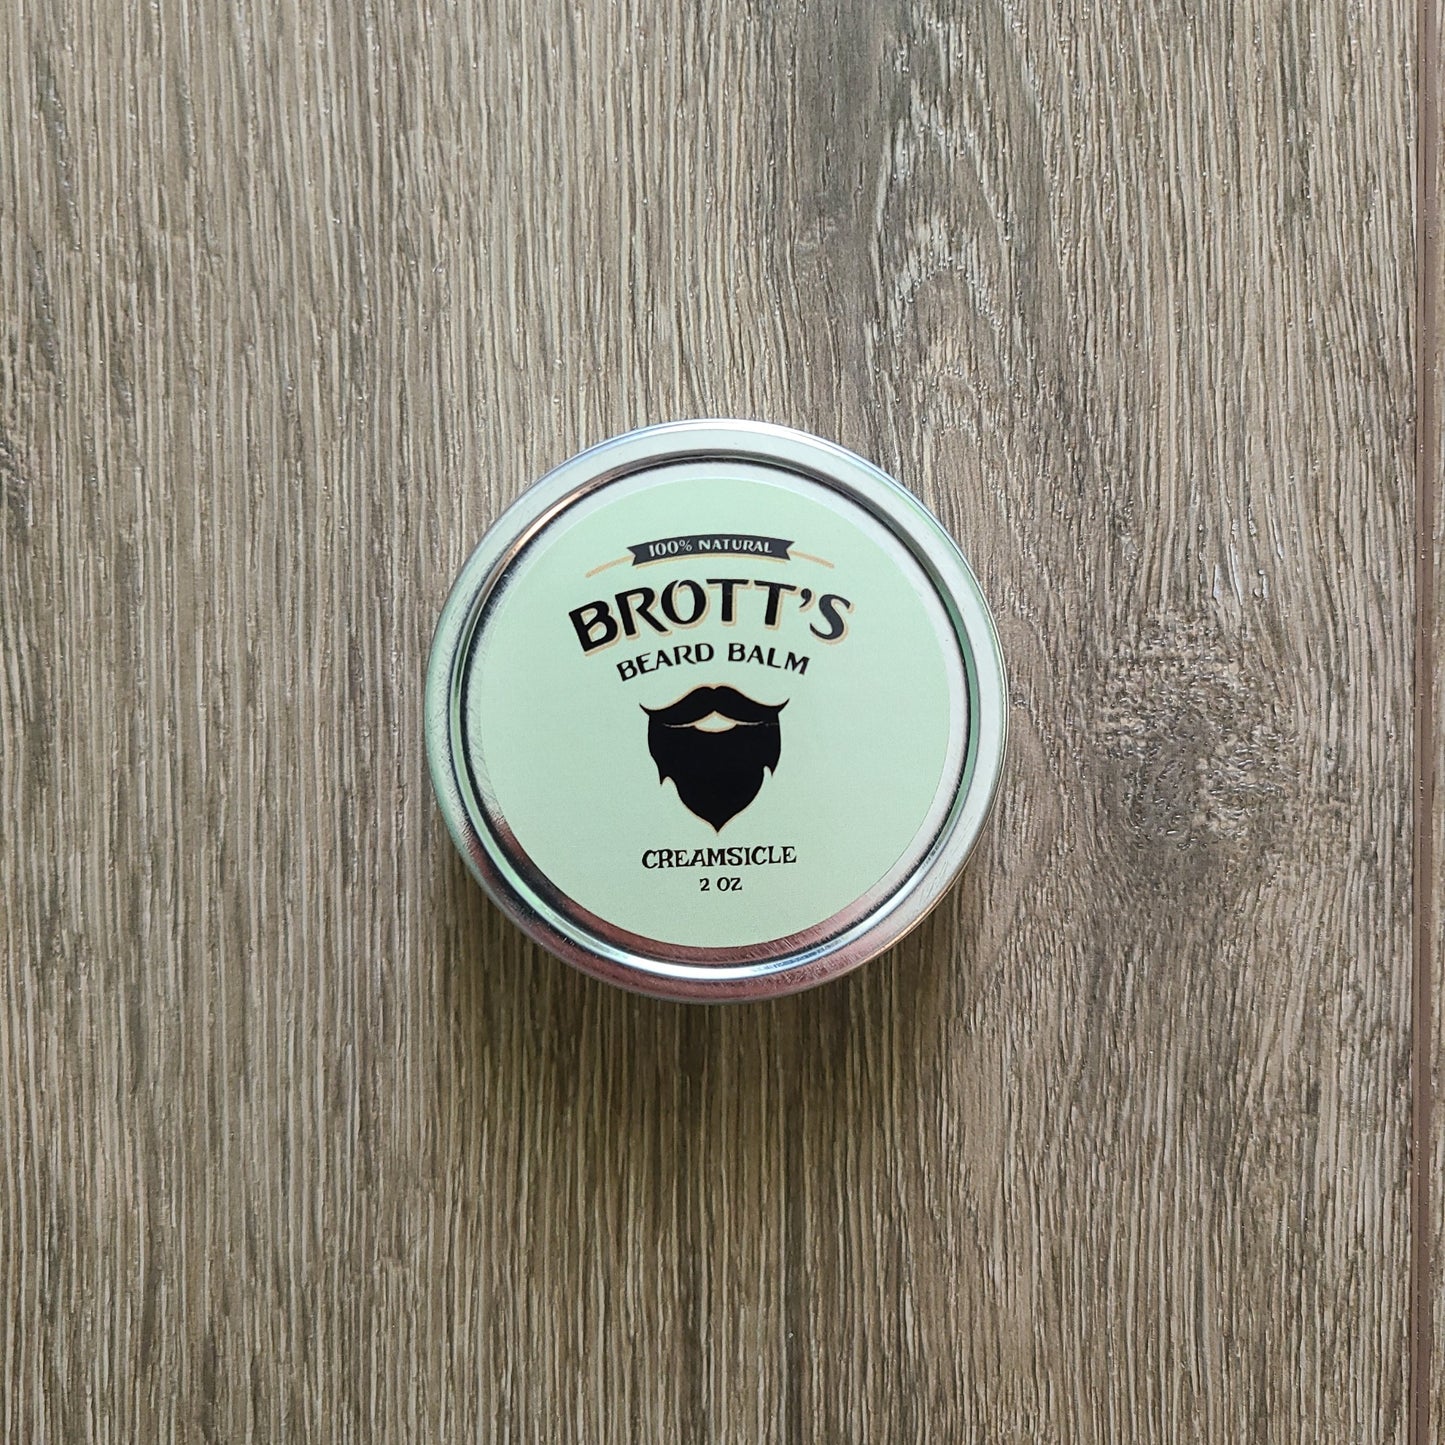 Creamsicle scented beard balm 2 ounce tin